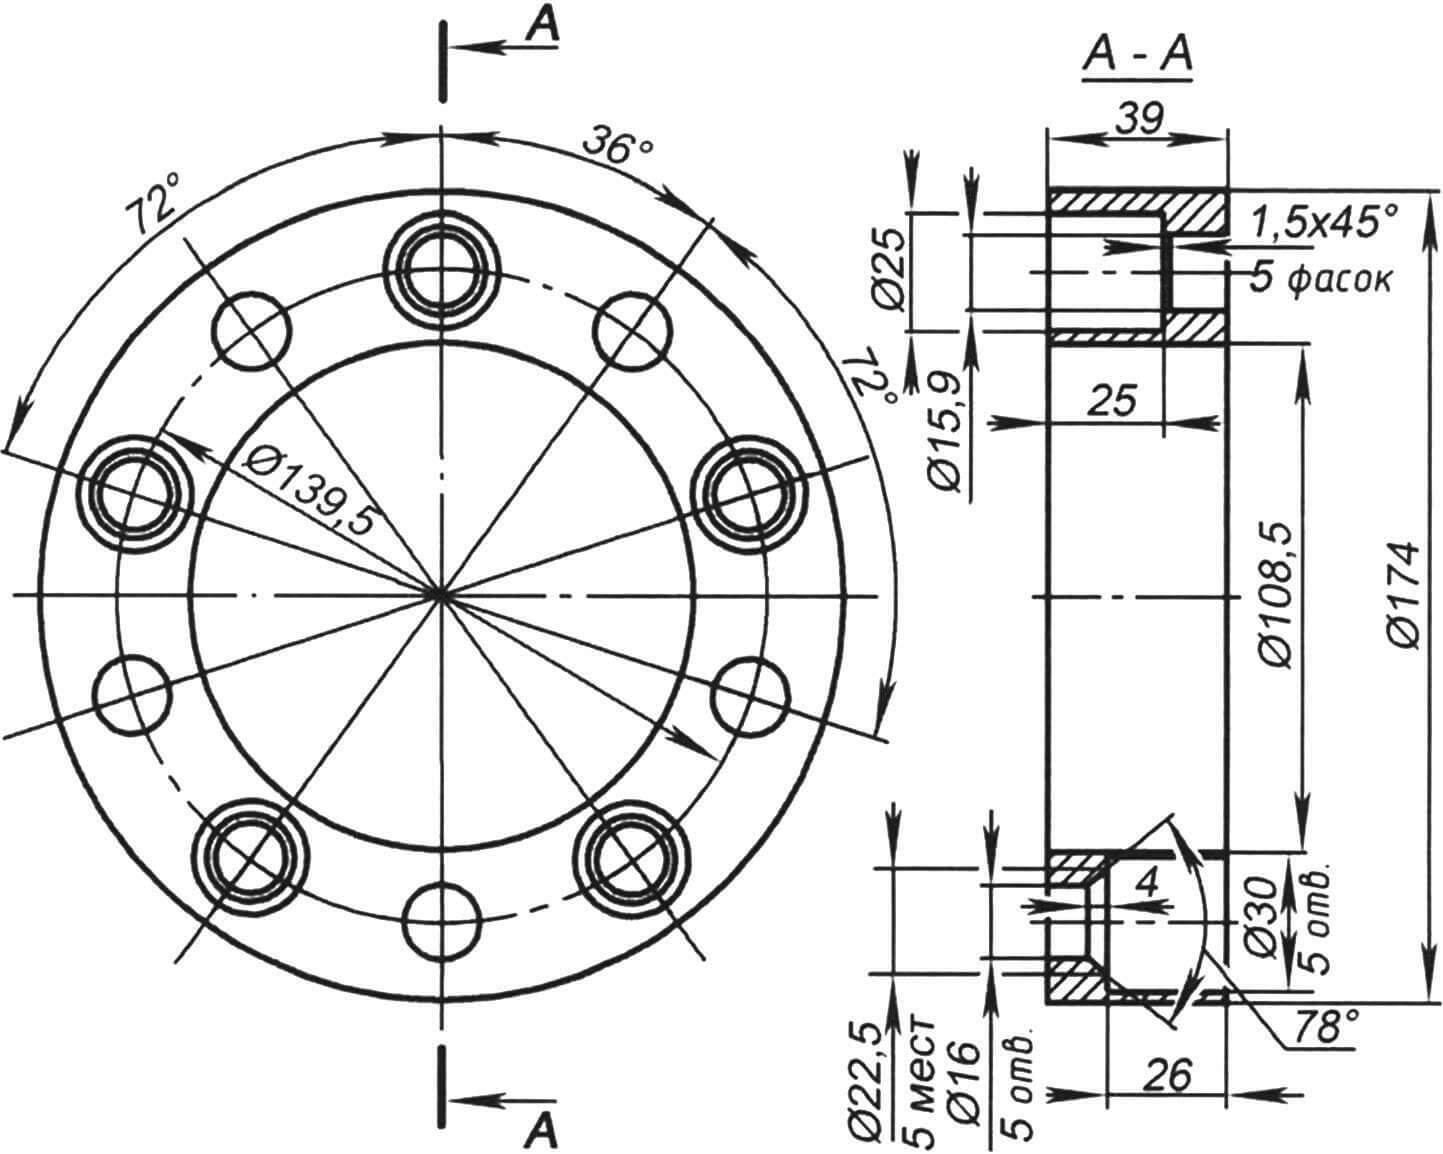 Wheel spacer between the brake drum and the wheel rim (4 pcs.)